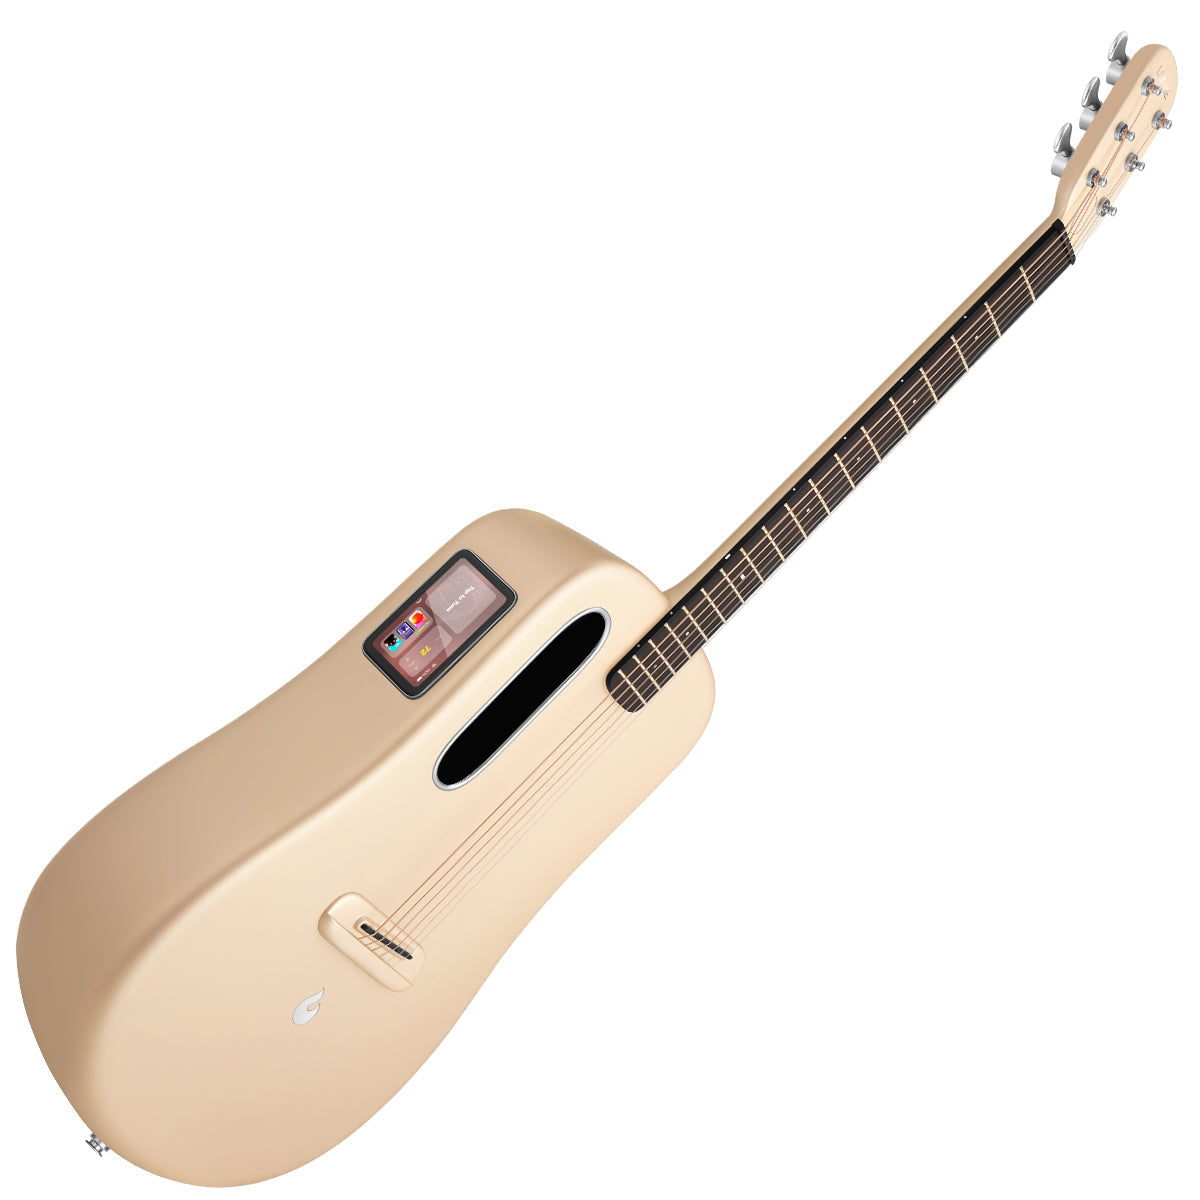 LAVA ME4 Carbon 36" with AirFlow Bag ~ Soft Gold, Acoustic Guitar for sale at Richards Guitars.